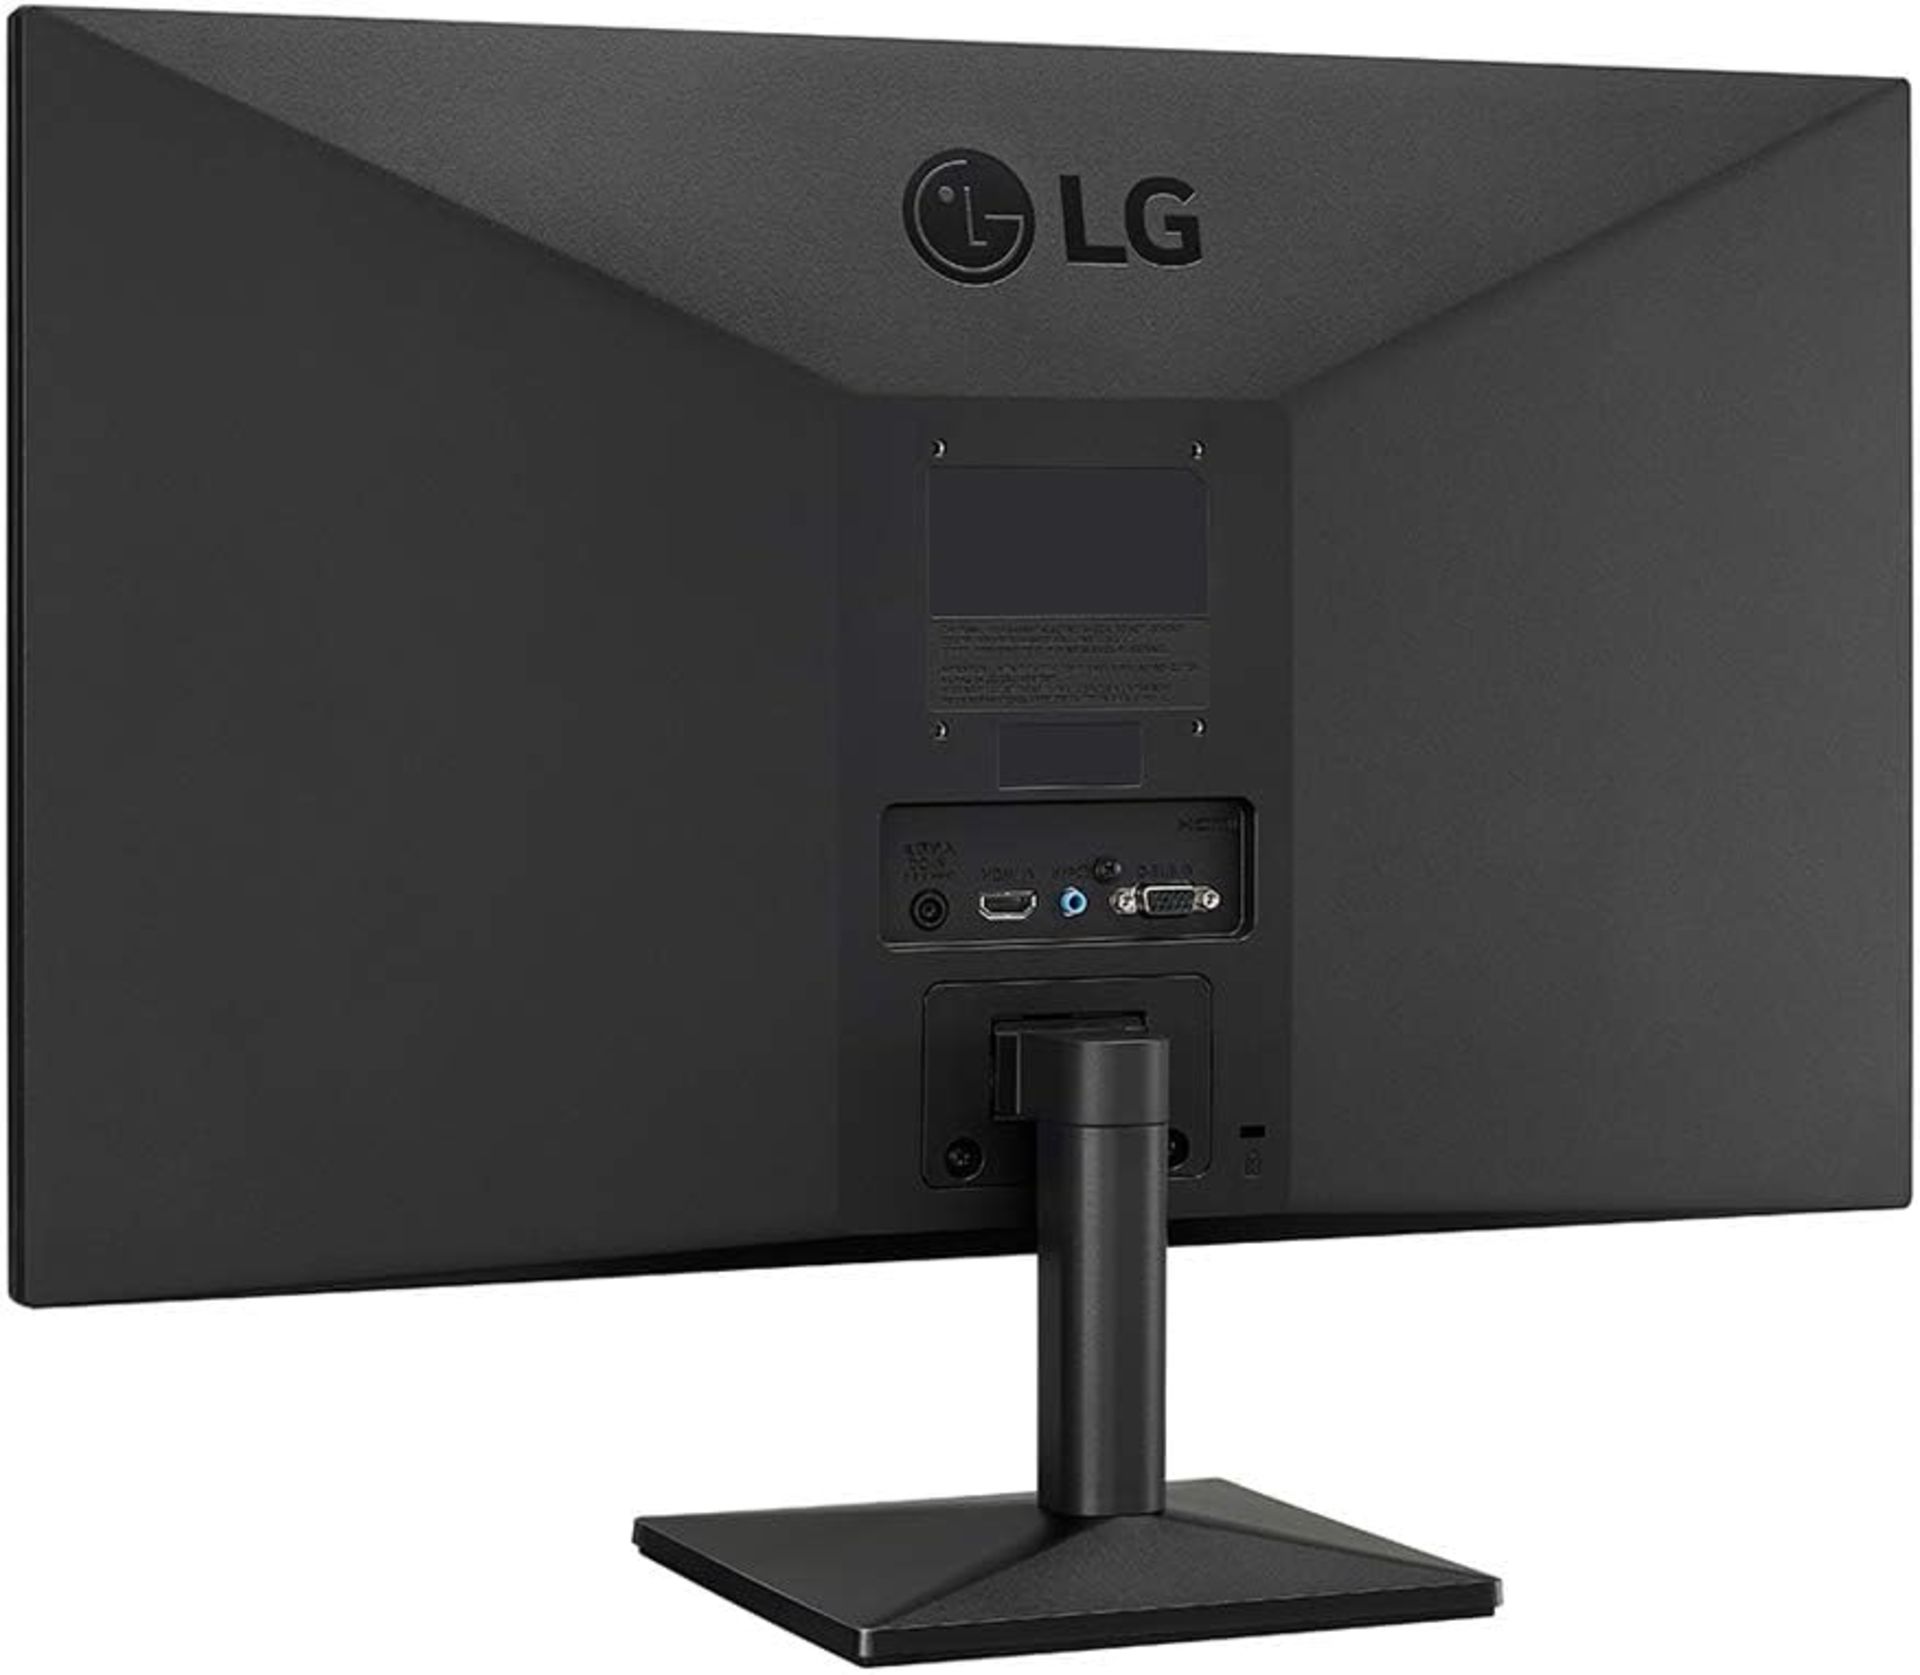 (GRADE A) LG 24MK430H-B 24 Inch Full HD Gaming Monitor. RRP £139.99. (R8R). 1080p Full HD resolution - Image 4 of 4